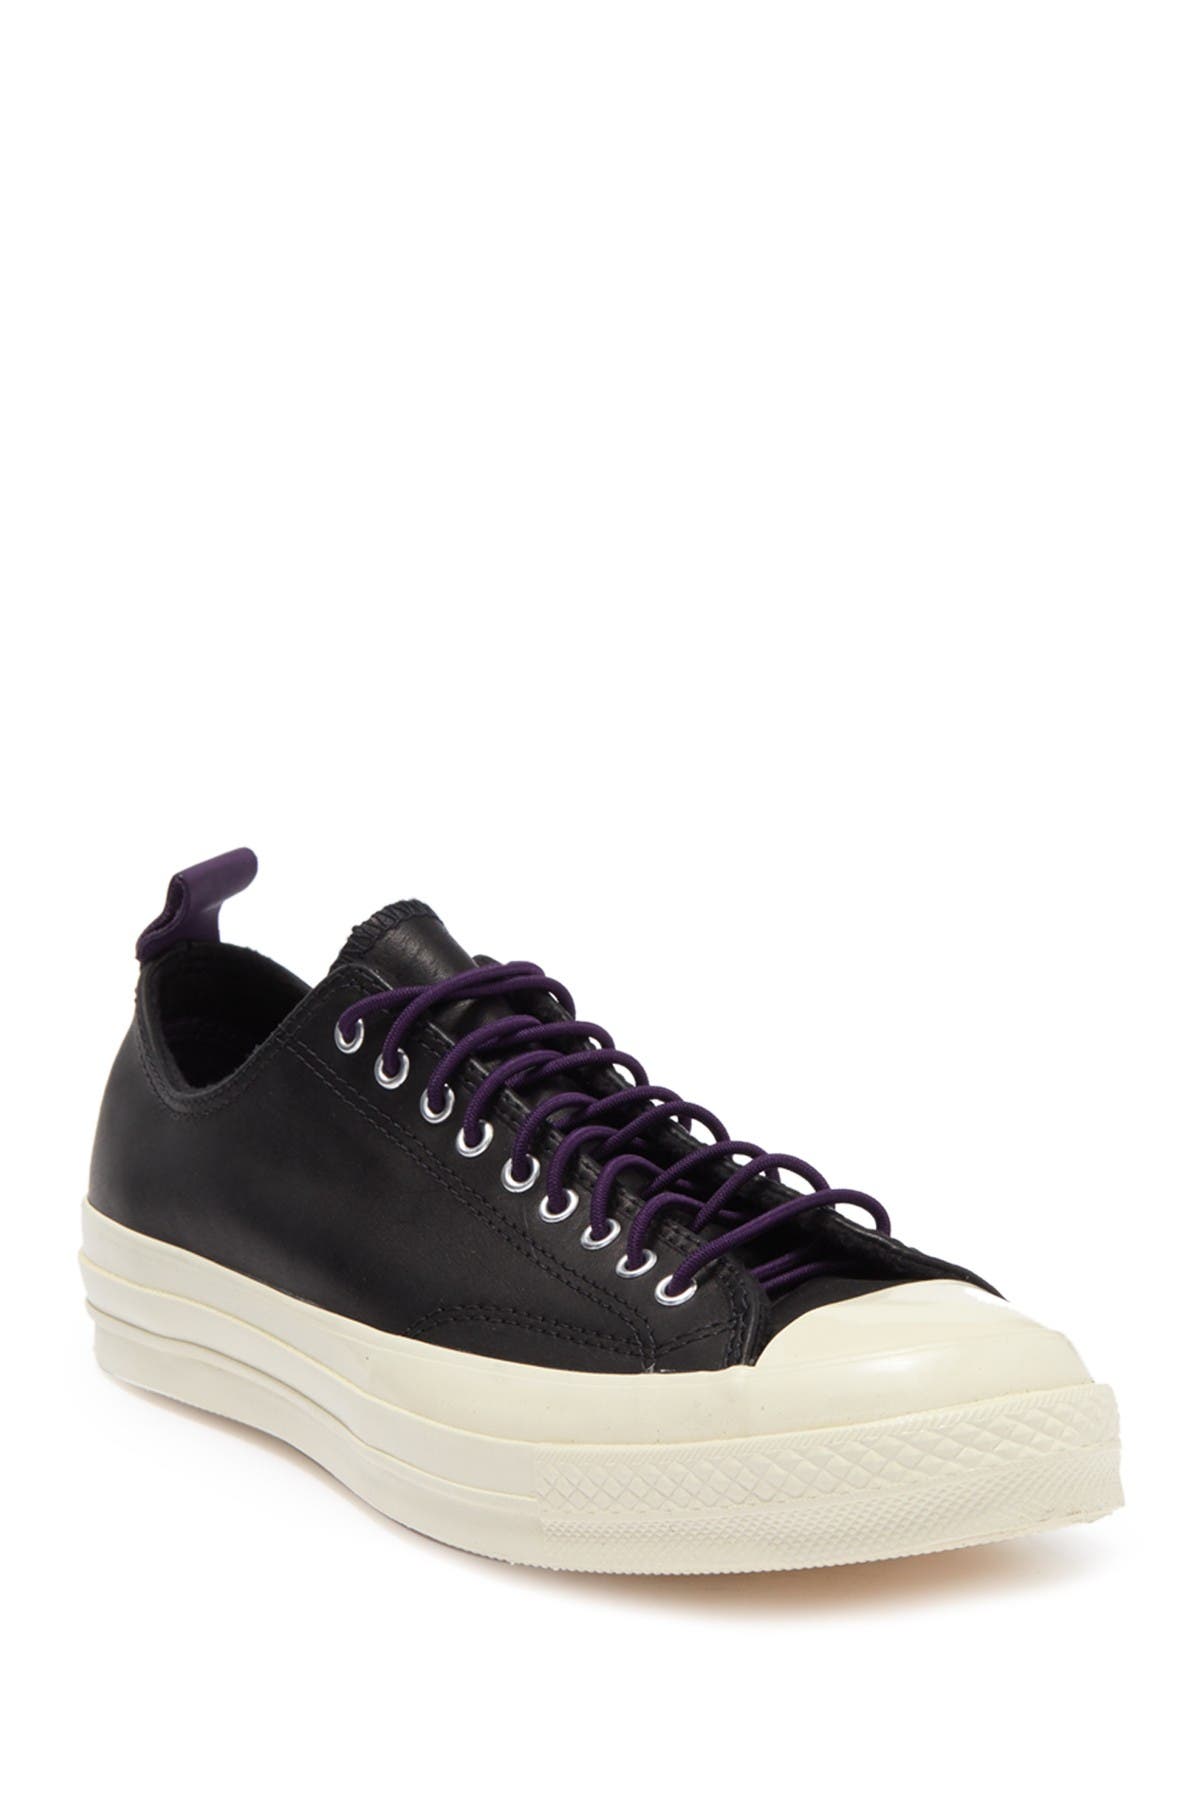 Converse Chuck Taylor 70 Leather Sneaker In Grand Purple/egret